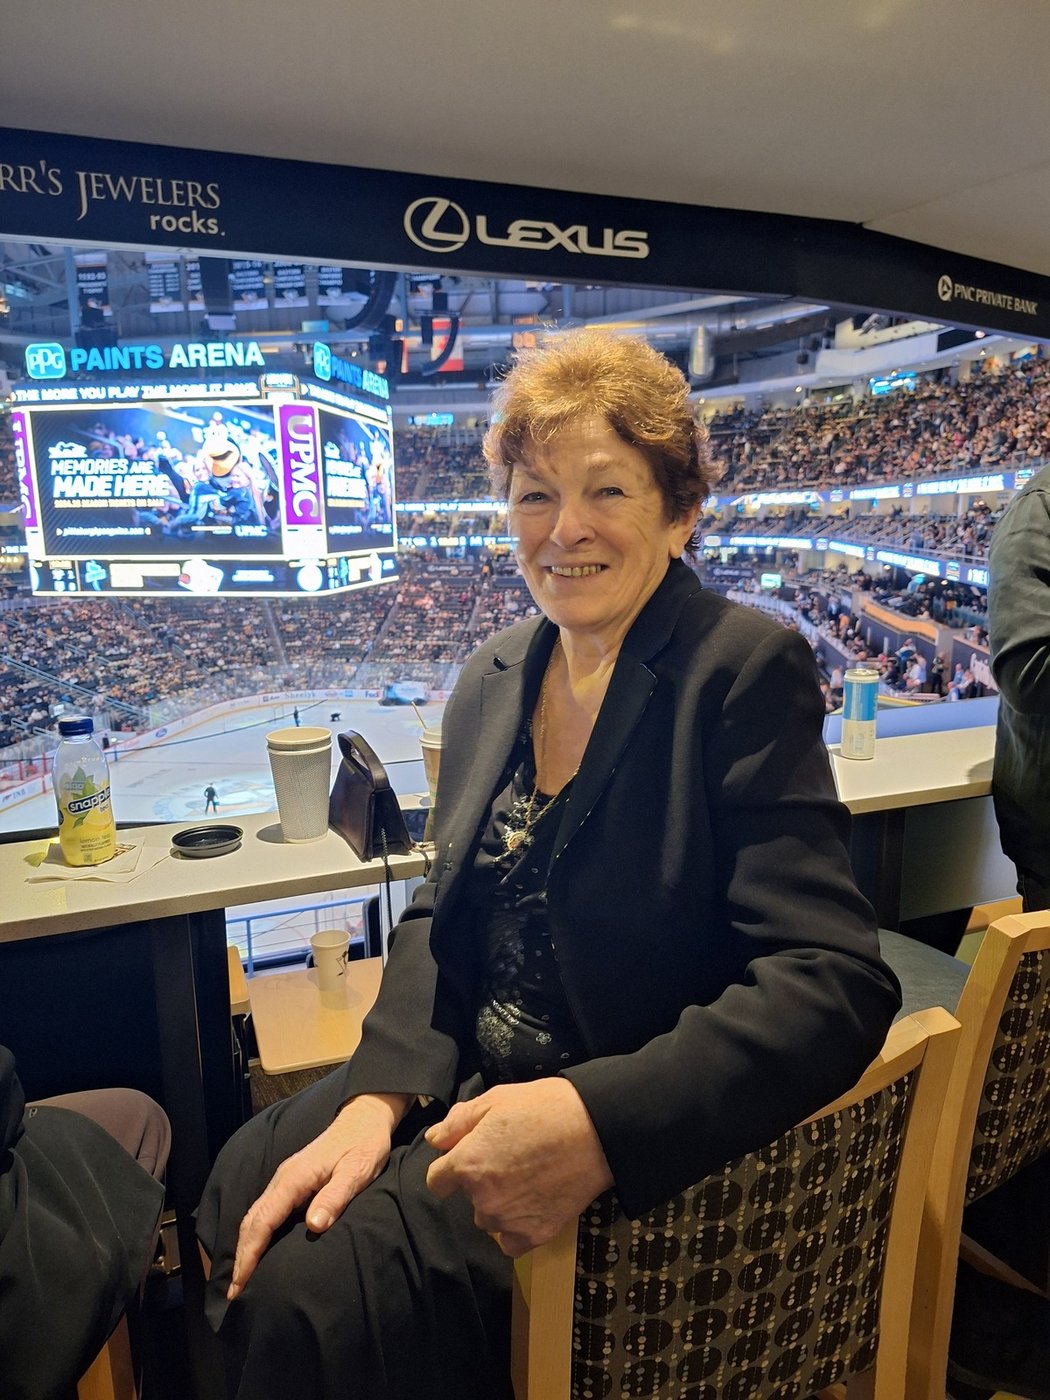 Anna Jágrová, matka hokejové legendy Jaromíra Jágra, sledovala zápas Pittsburghu s Los Angeles ze sky boxu